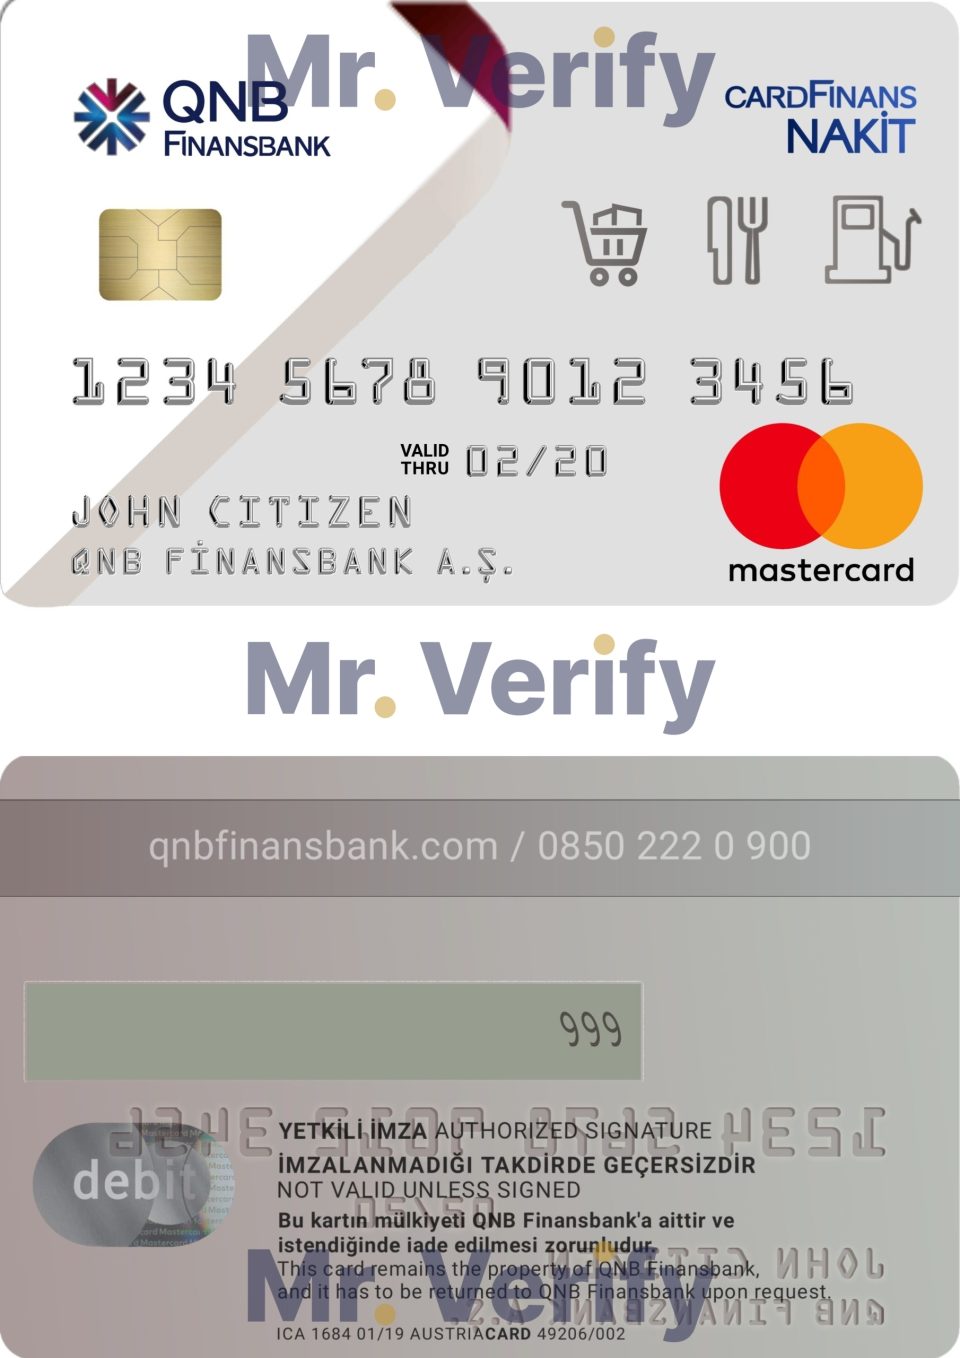 Fillable Turkey QNB Finansbank credit card Templates | Layer-Based PSD